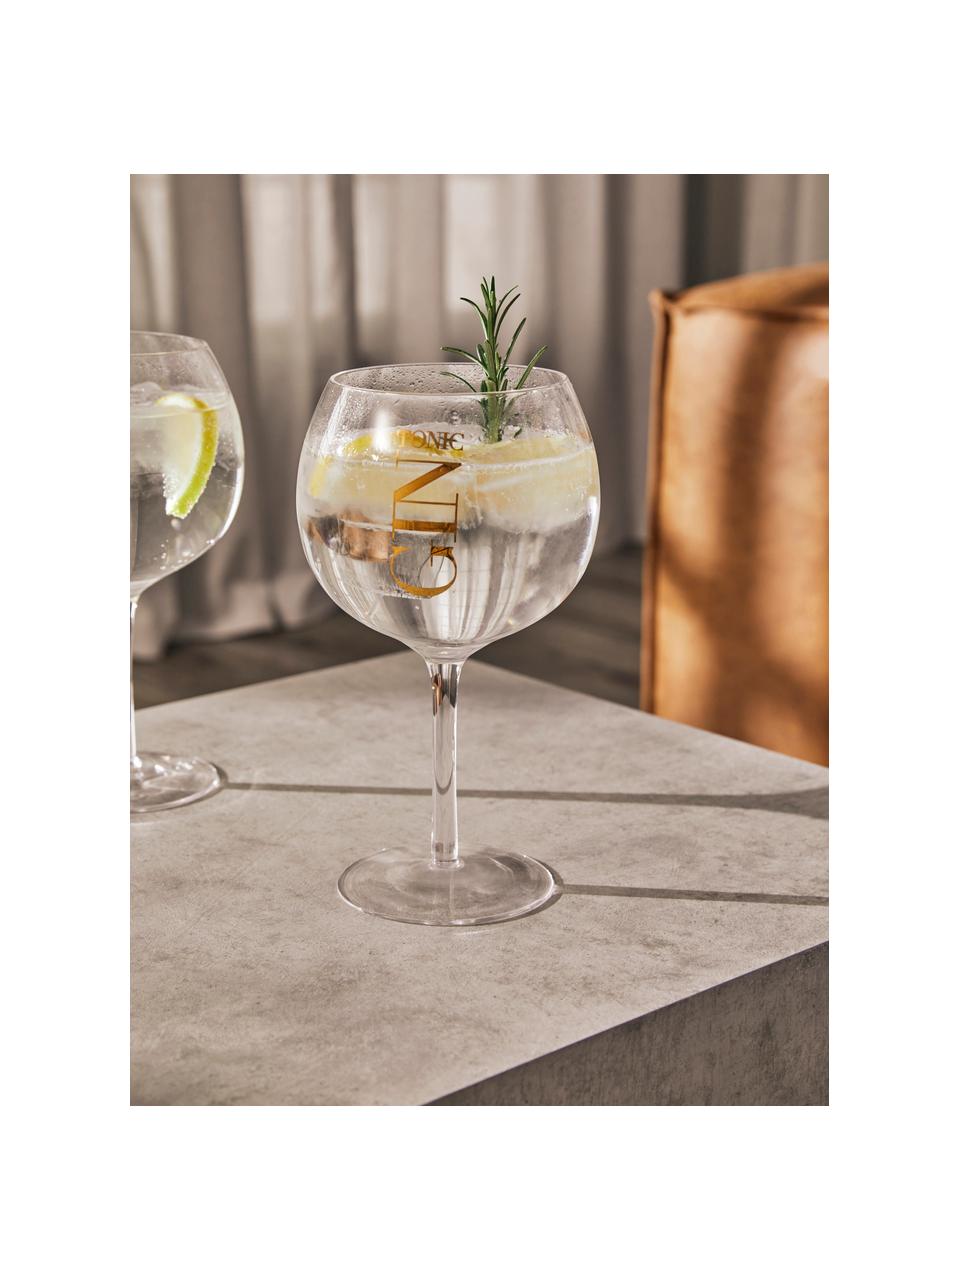 Gin Tonic Gläser mit Aufschrift, 4 Stück, Glas, Transparent, Ø 13 x H 22 cm, 180 ml